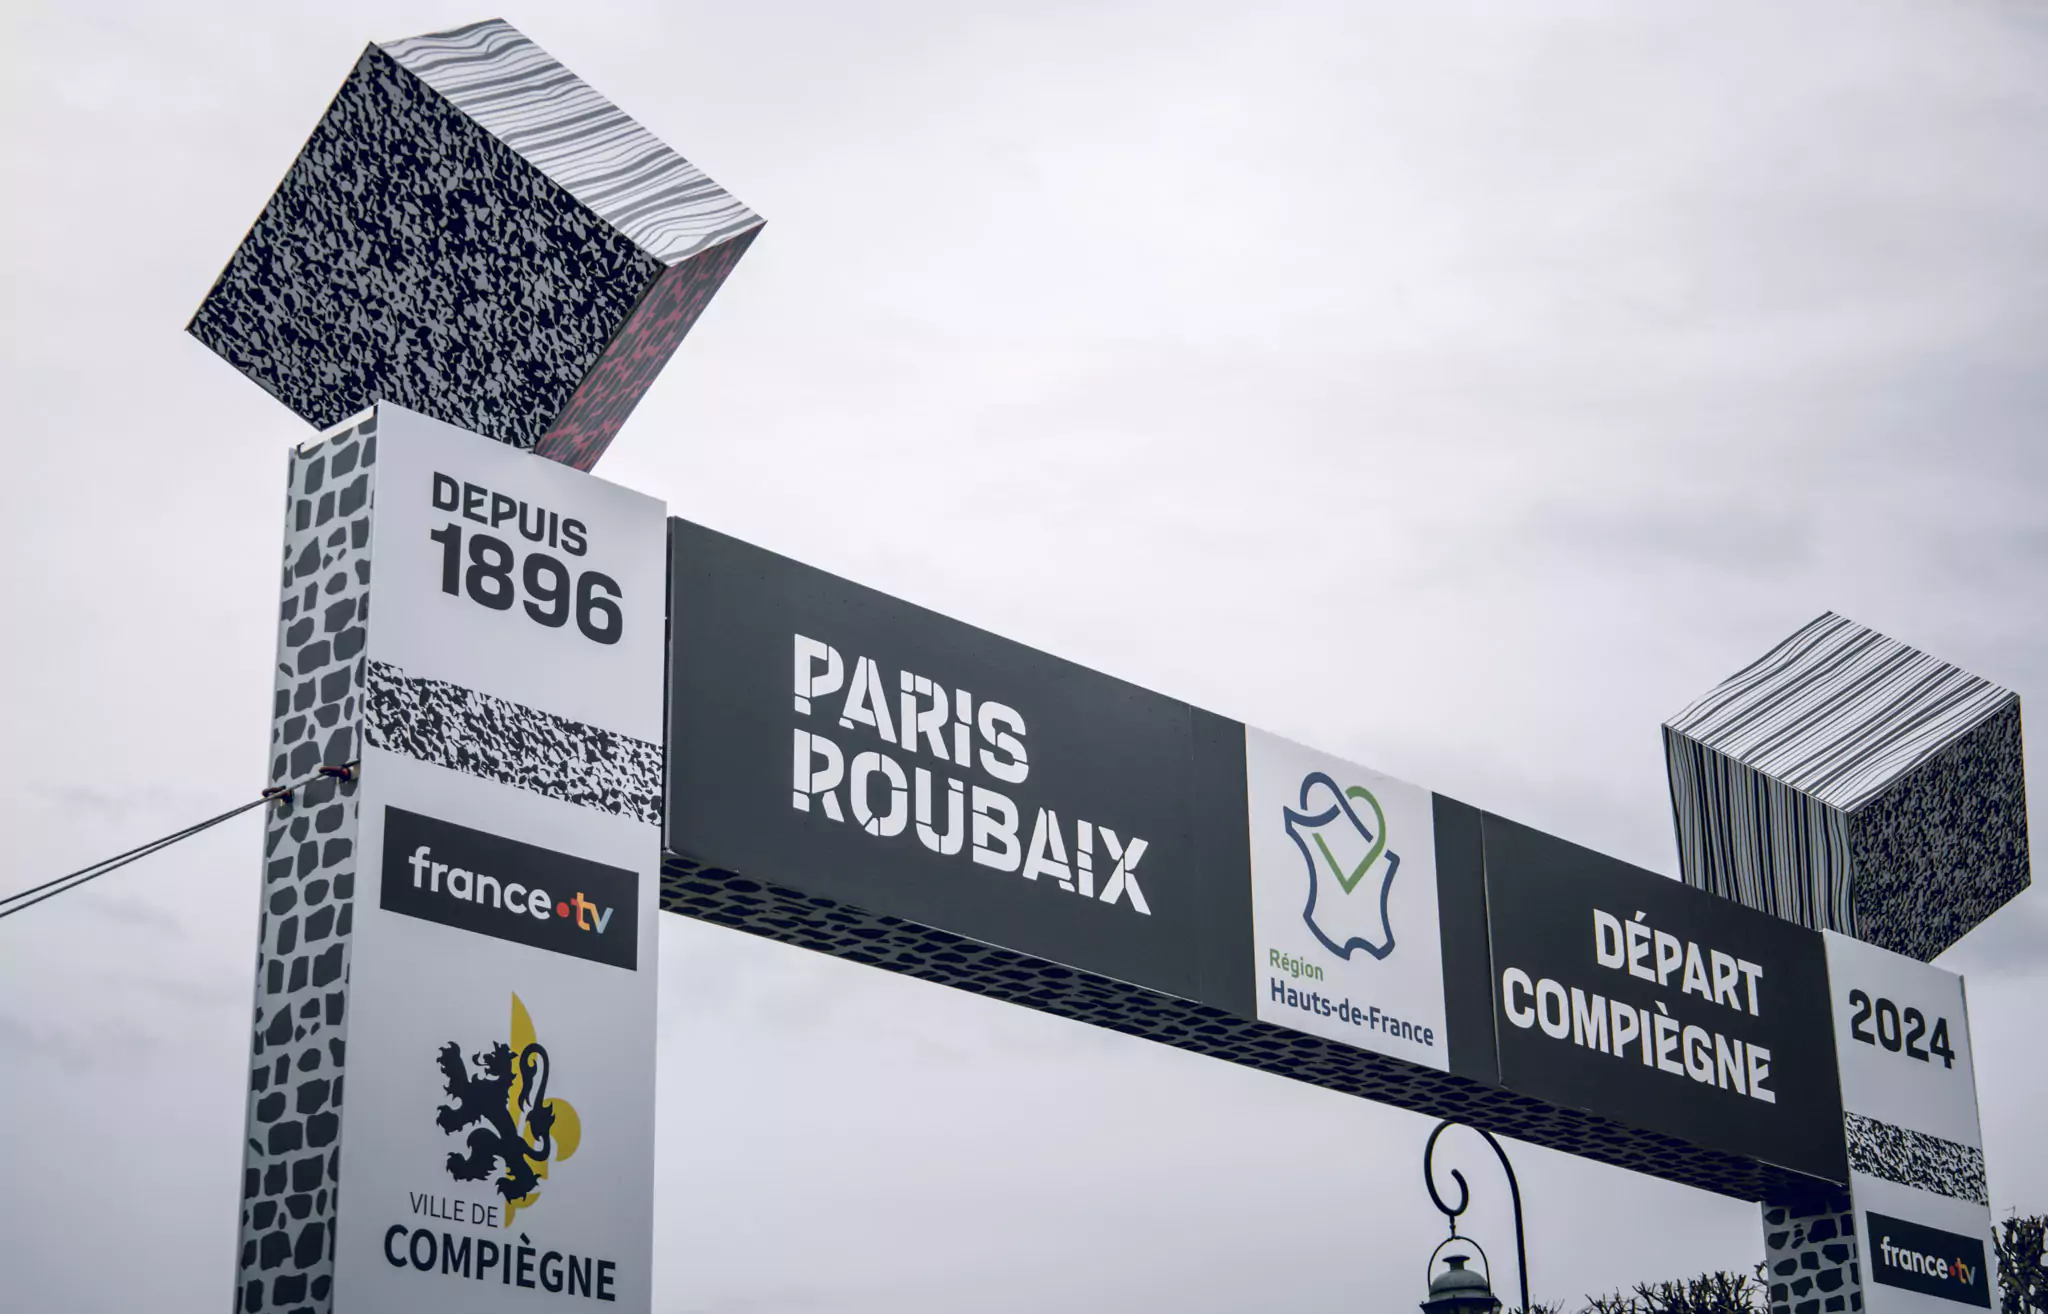 The starting arch of the men's Paris-Roubaix